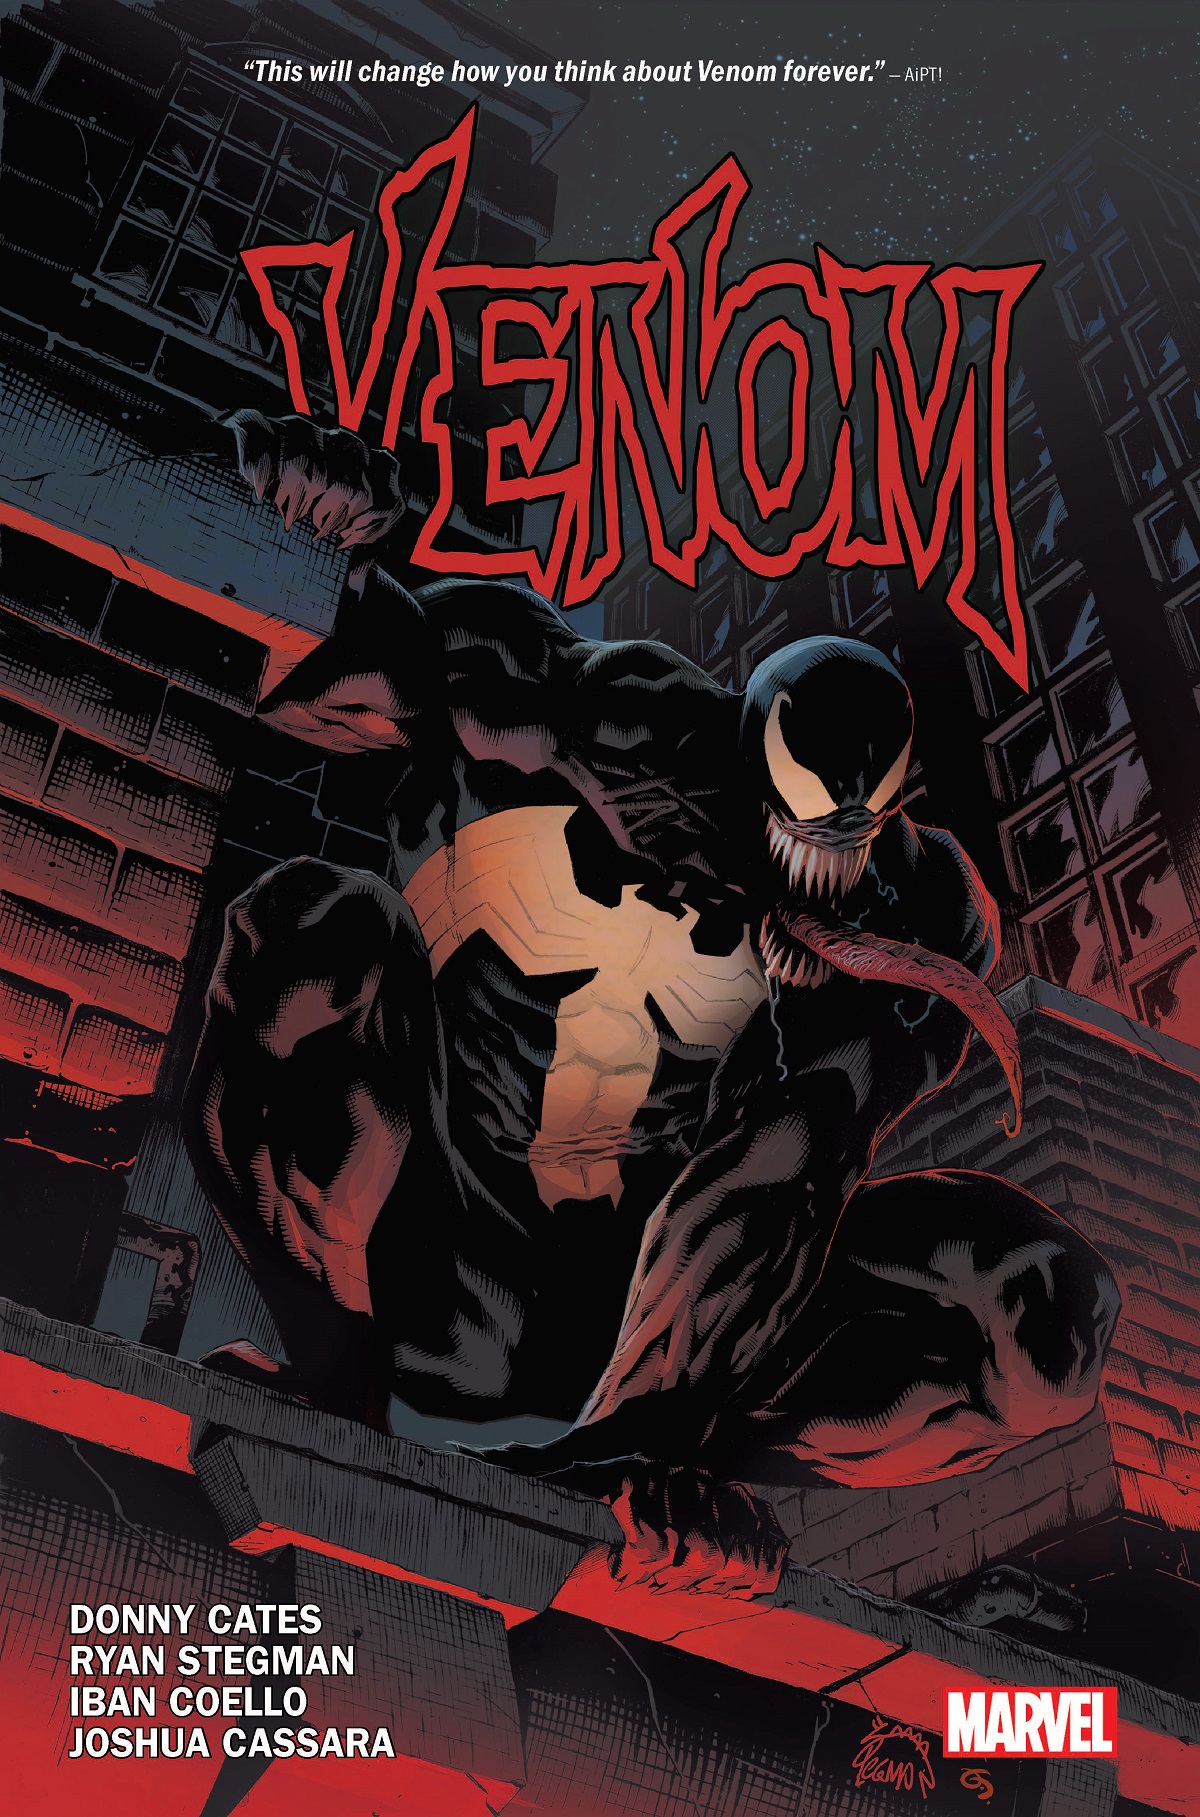 Venom by Donny Cates Vol. 1 (Trade Paperback)